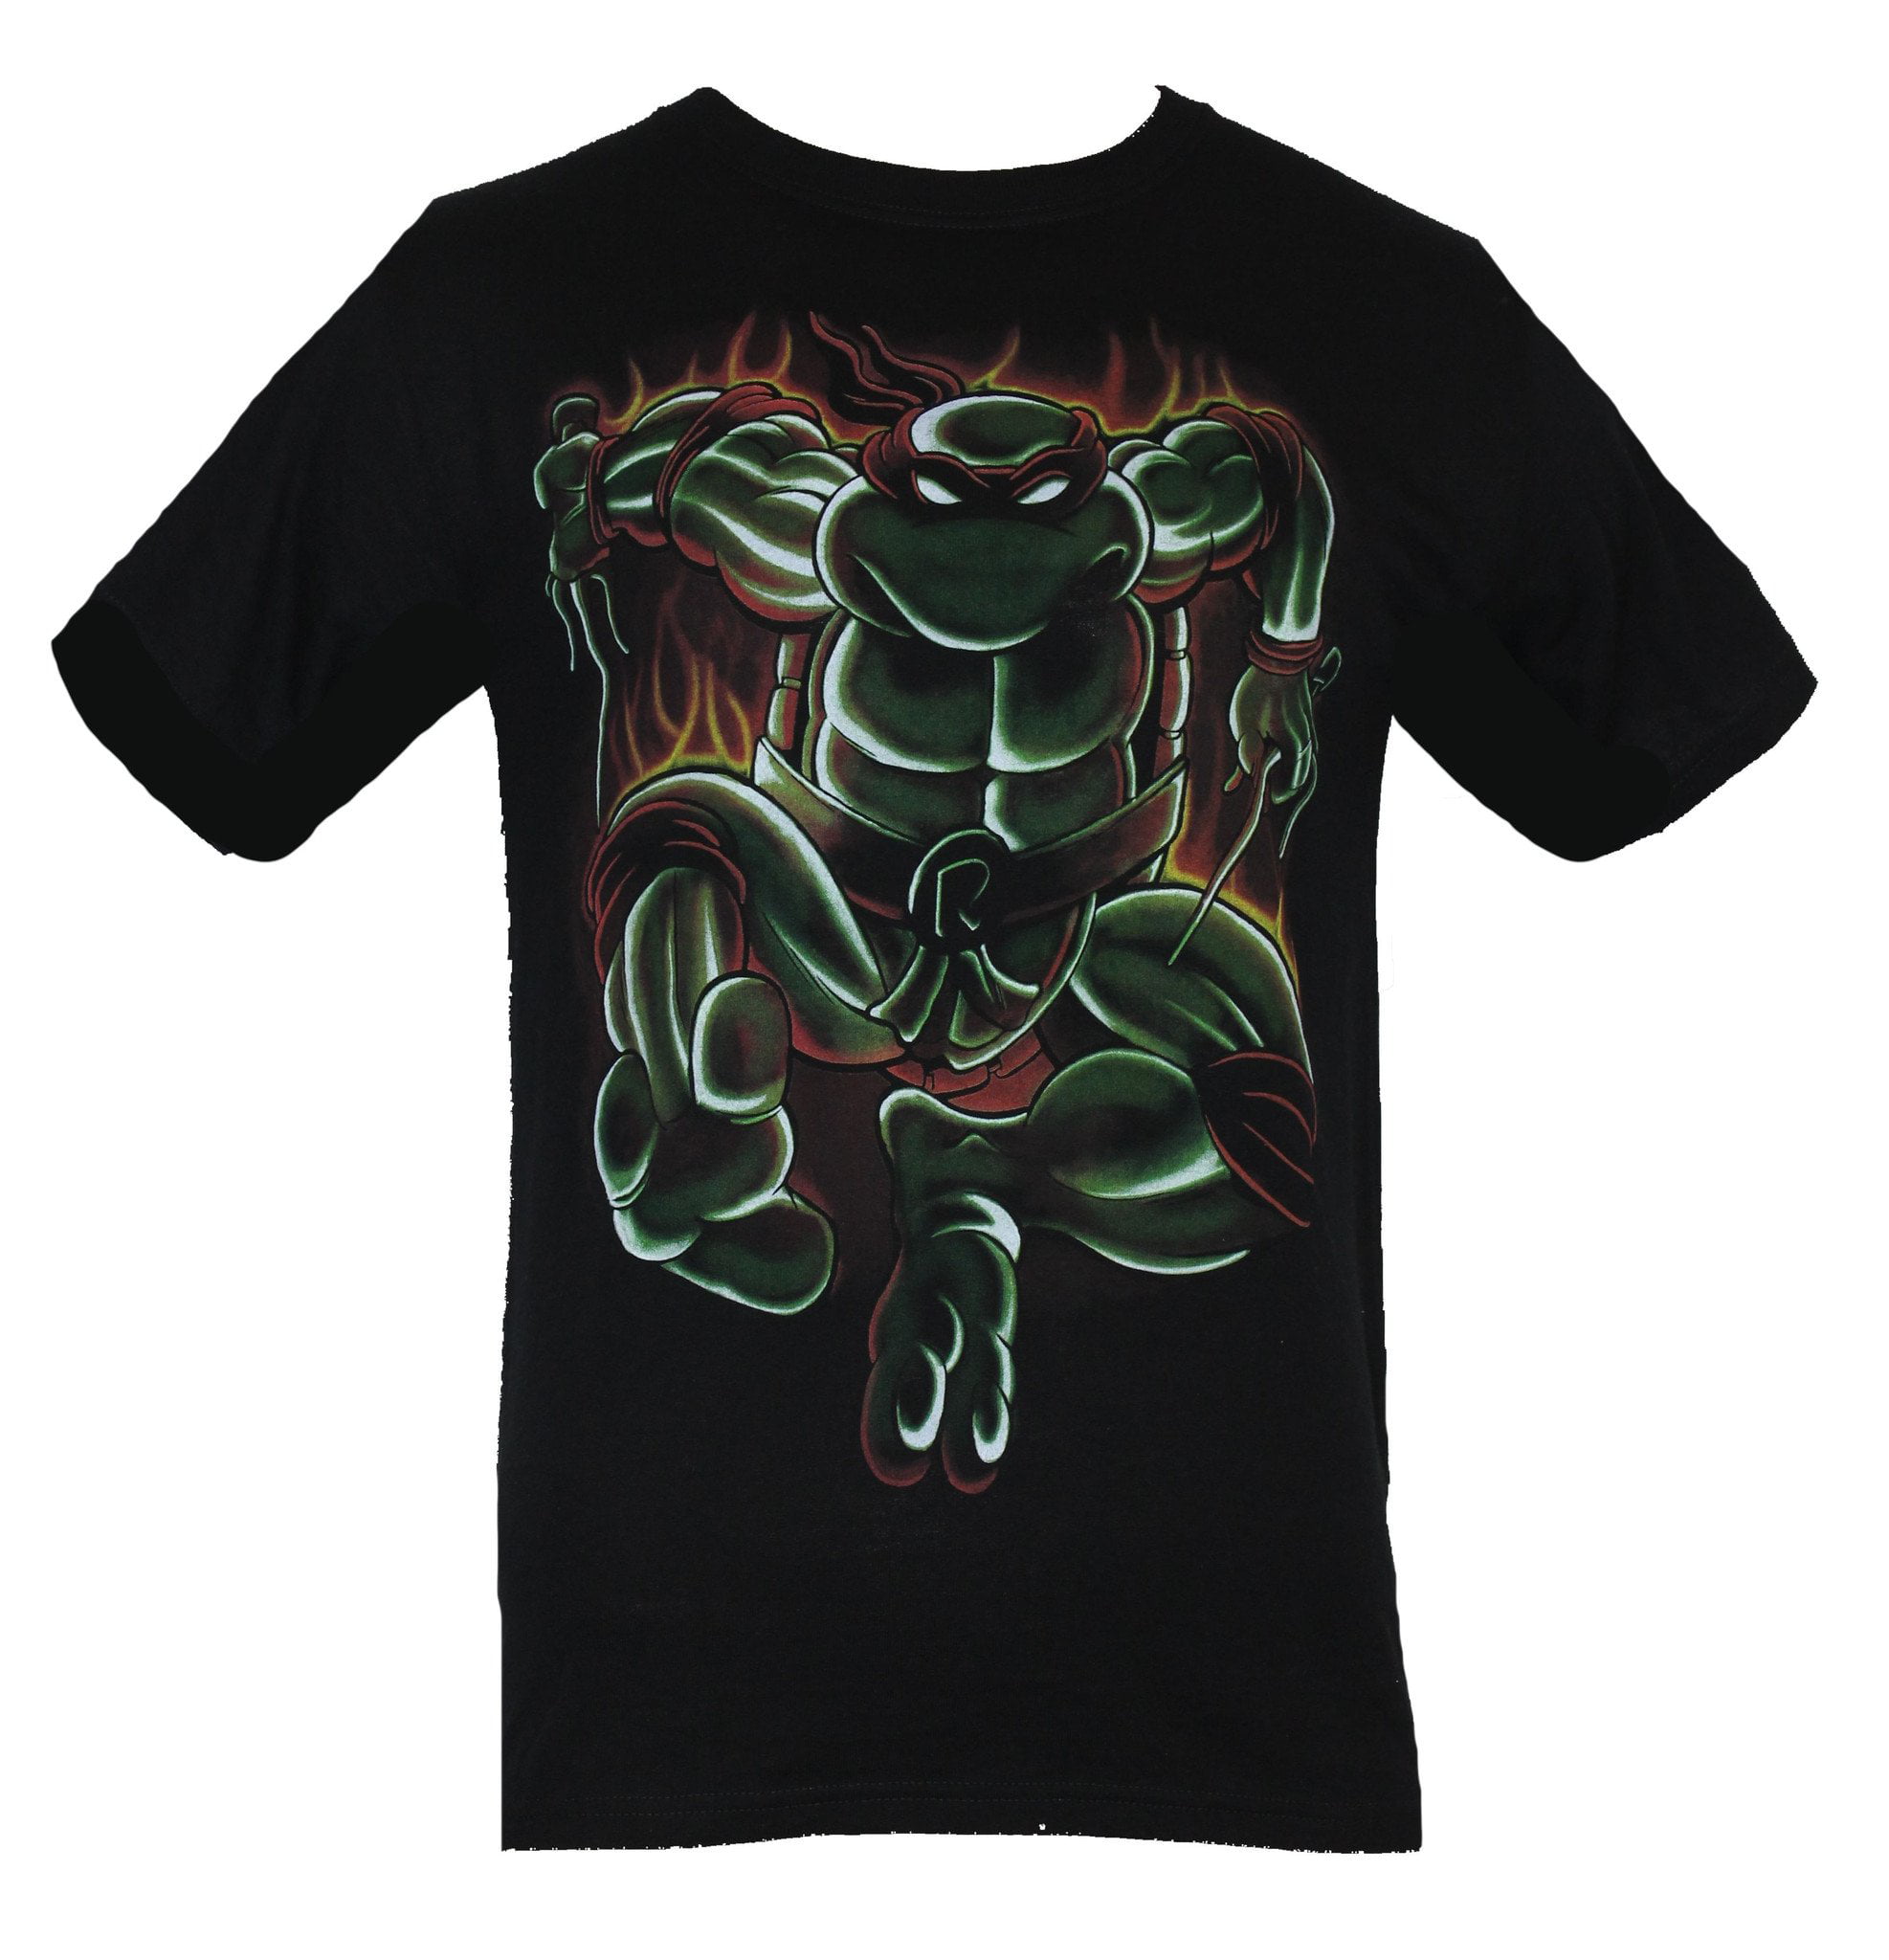 No Slice Left Behind BIG & TALL Men's T-Shirt Black Officially Licensed TMNT